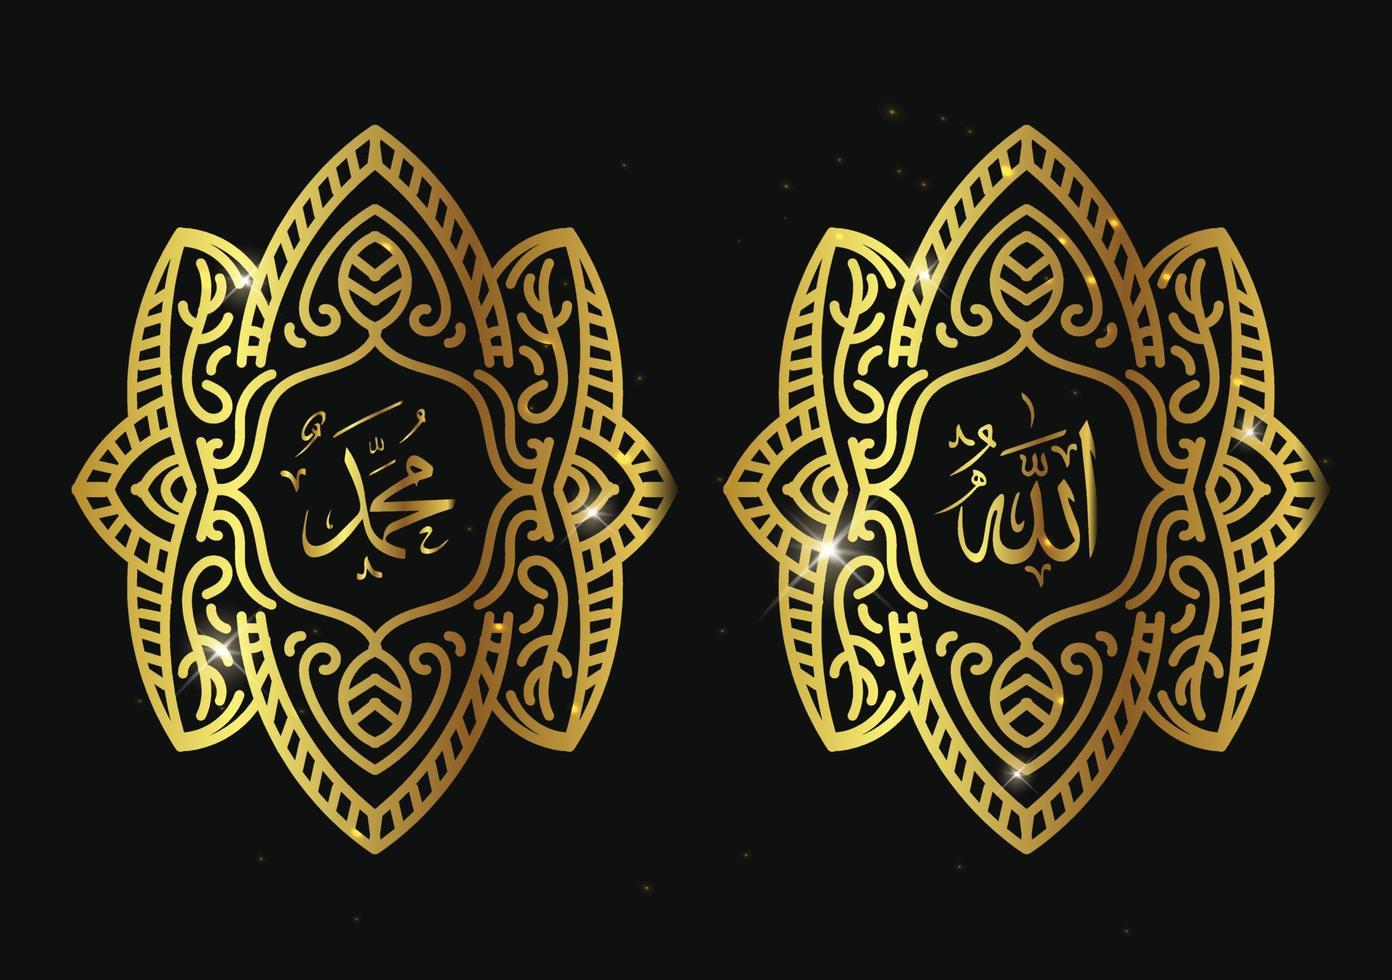 caligrafía árabe de allah muhammad con marco de lujo o marco vintage vector